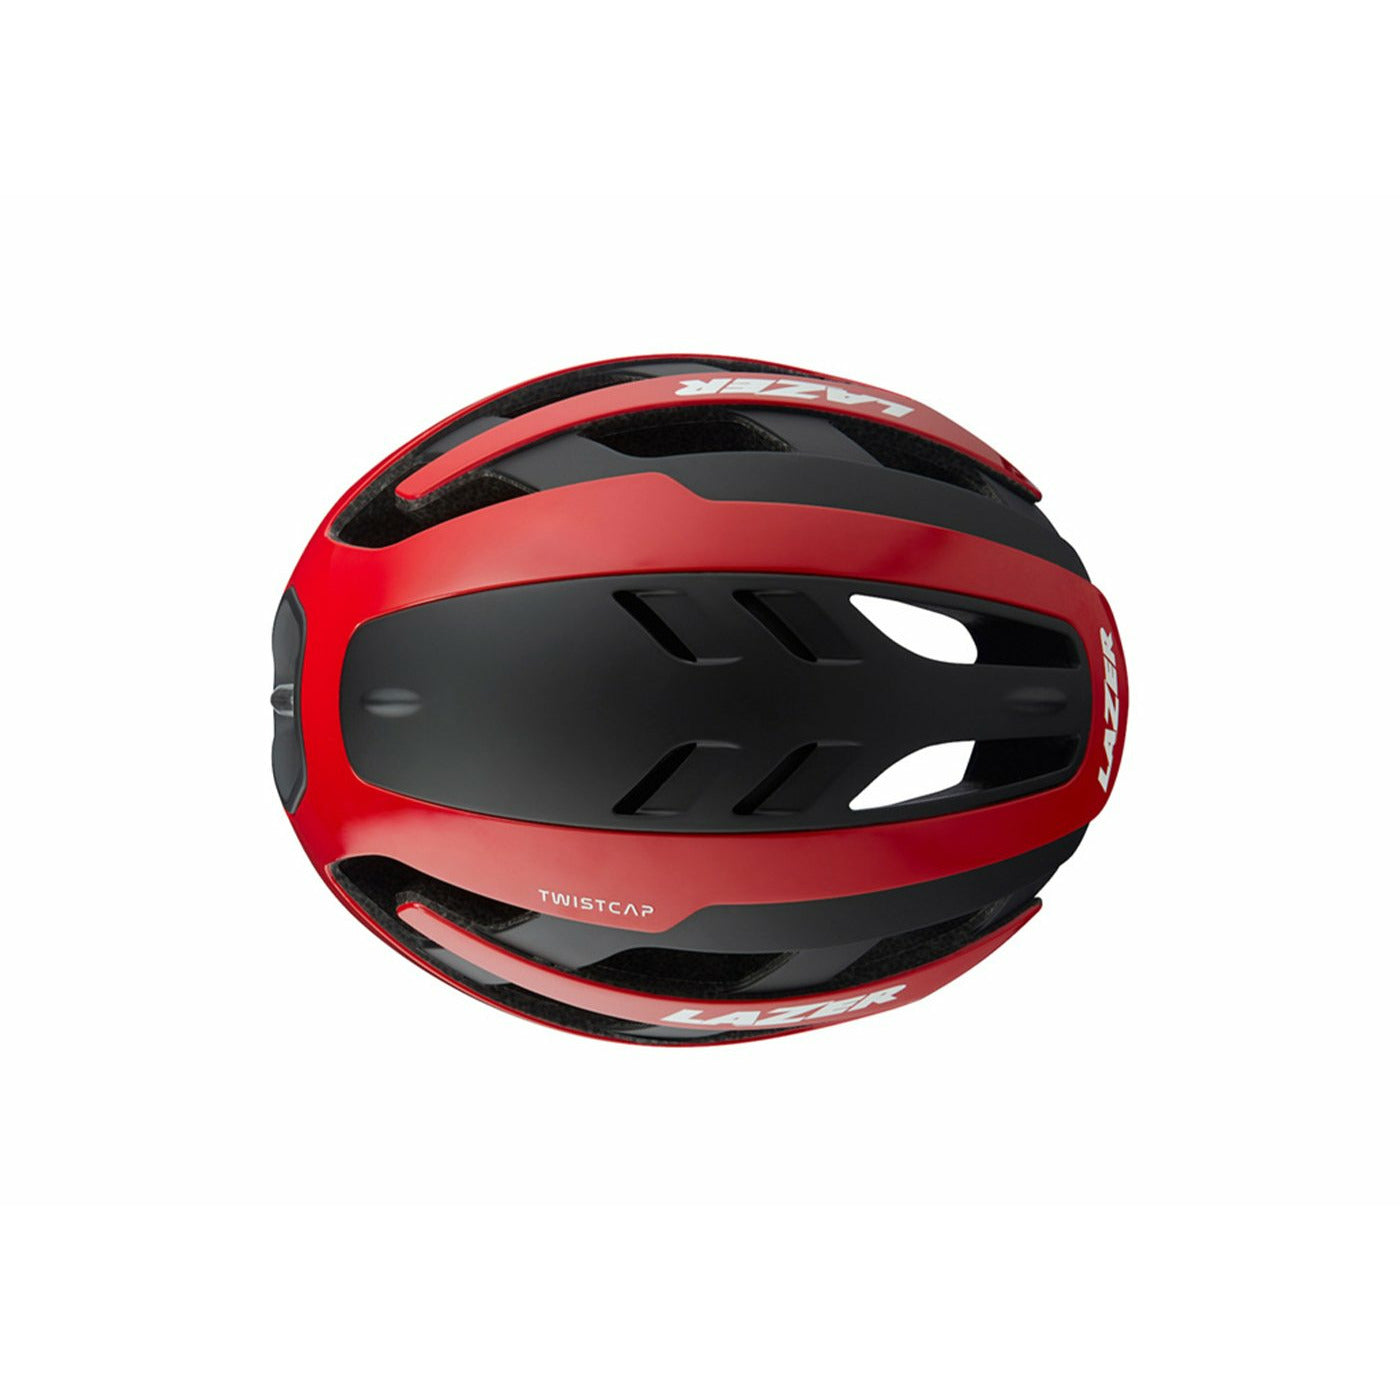 Lazer Century Road Bike Helmet